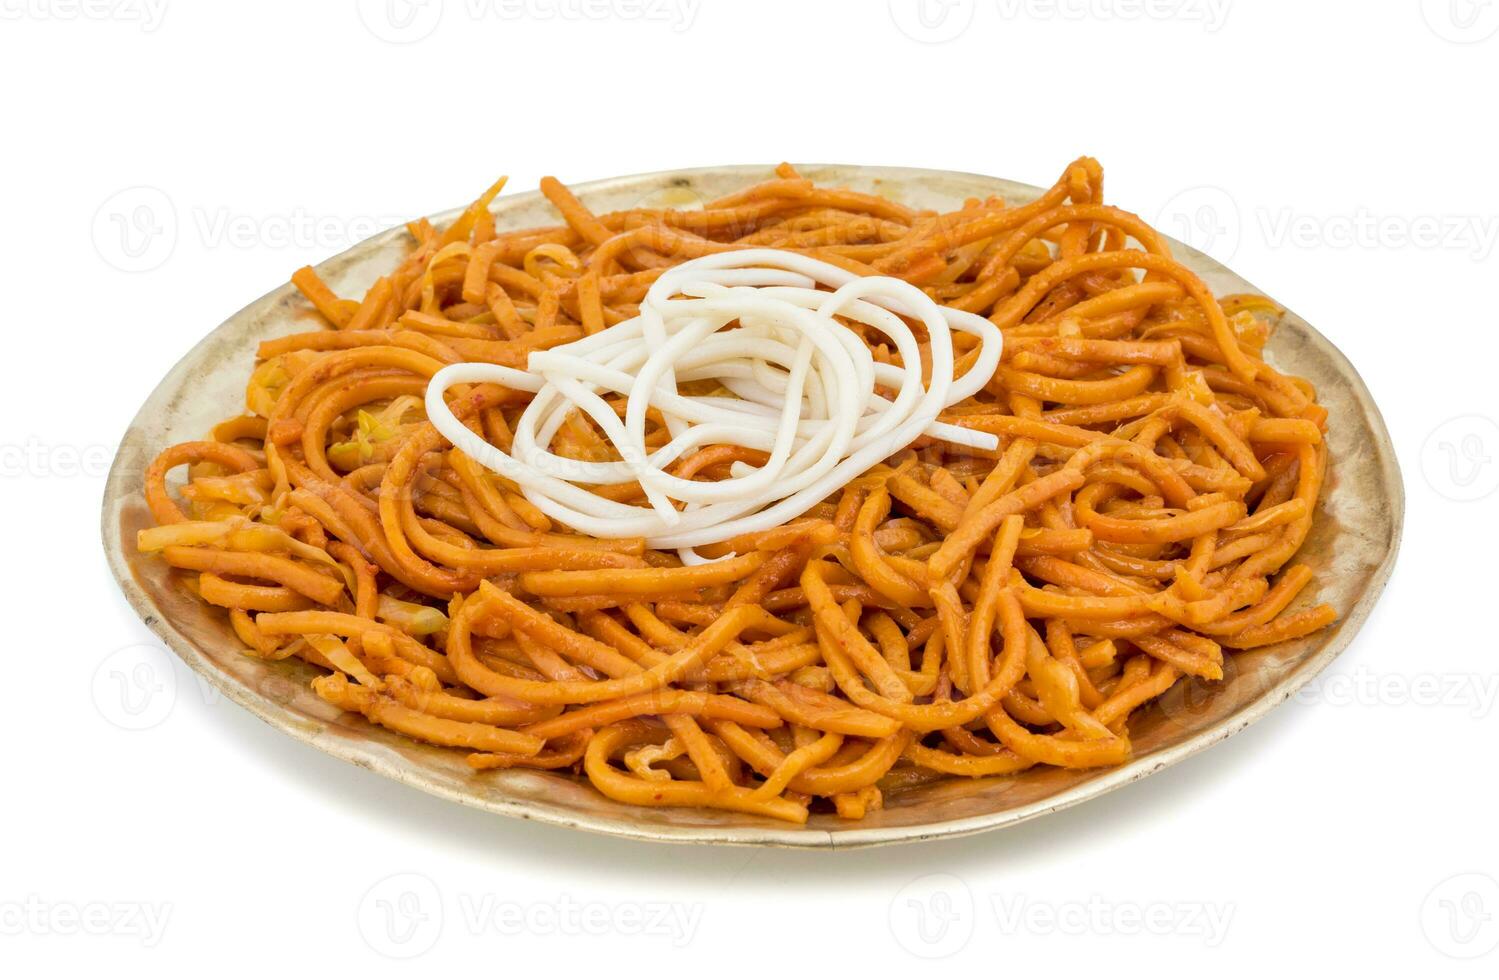 speziato fritte verdura veg rancio mein su bianca sfondo foto